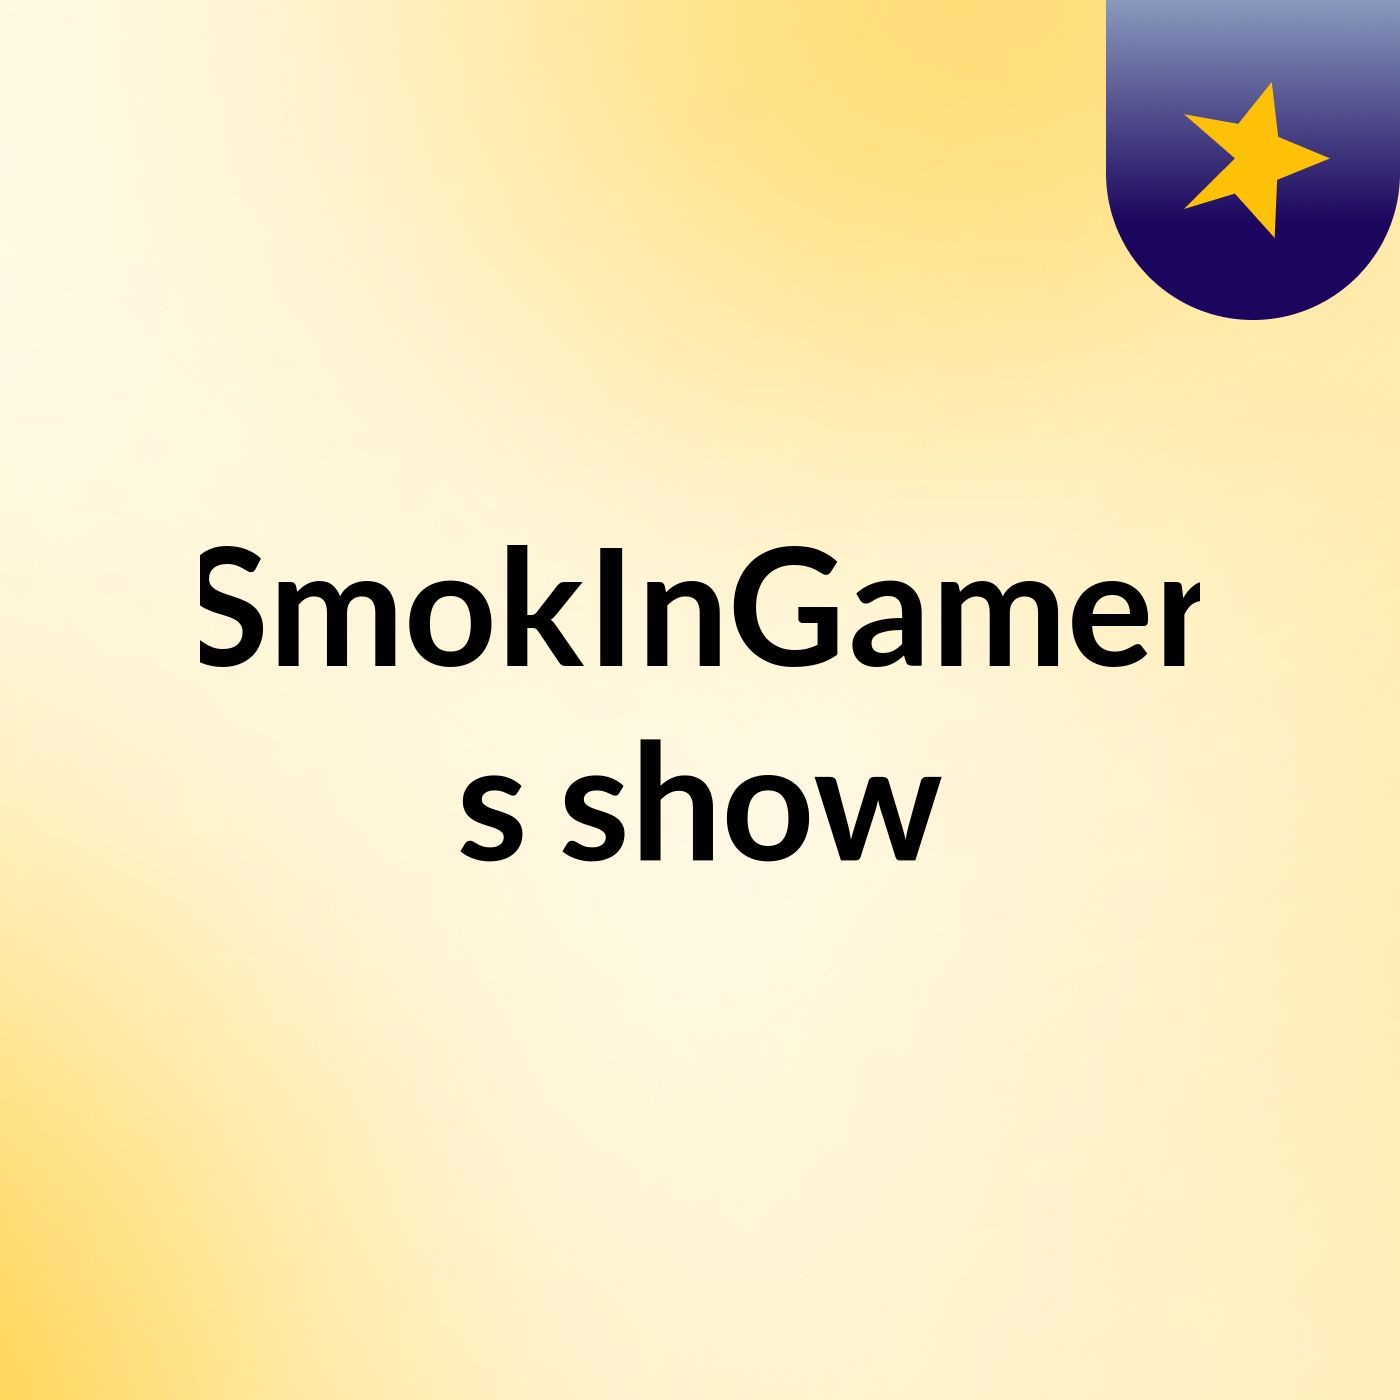 SmokInGamer's show